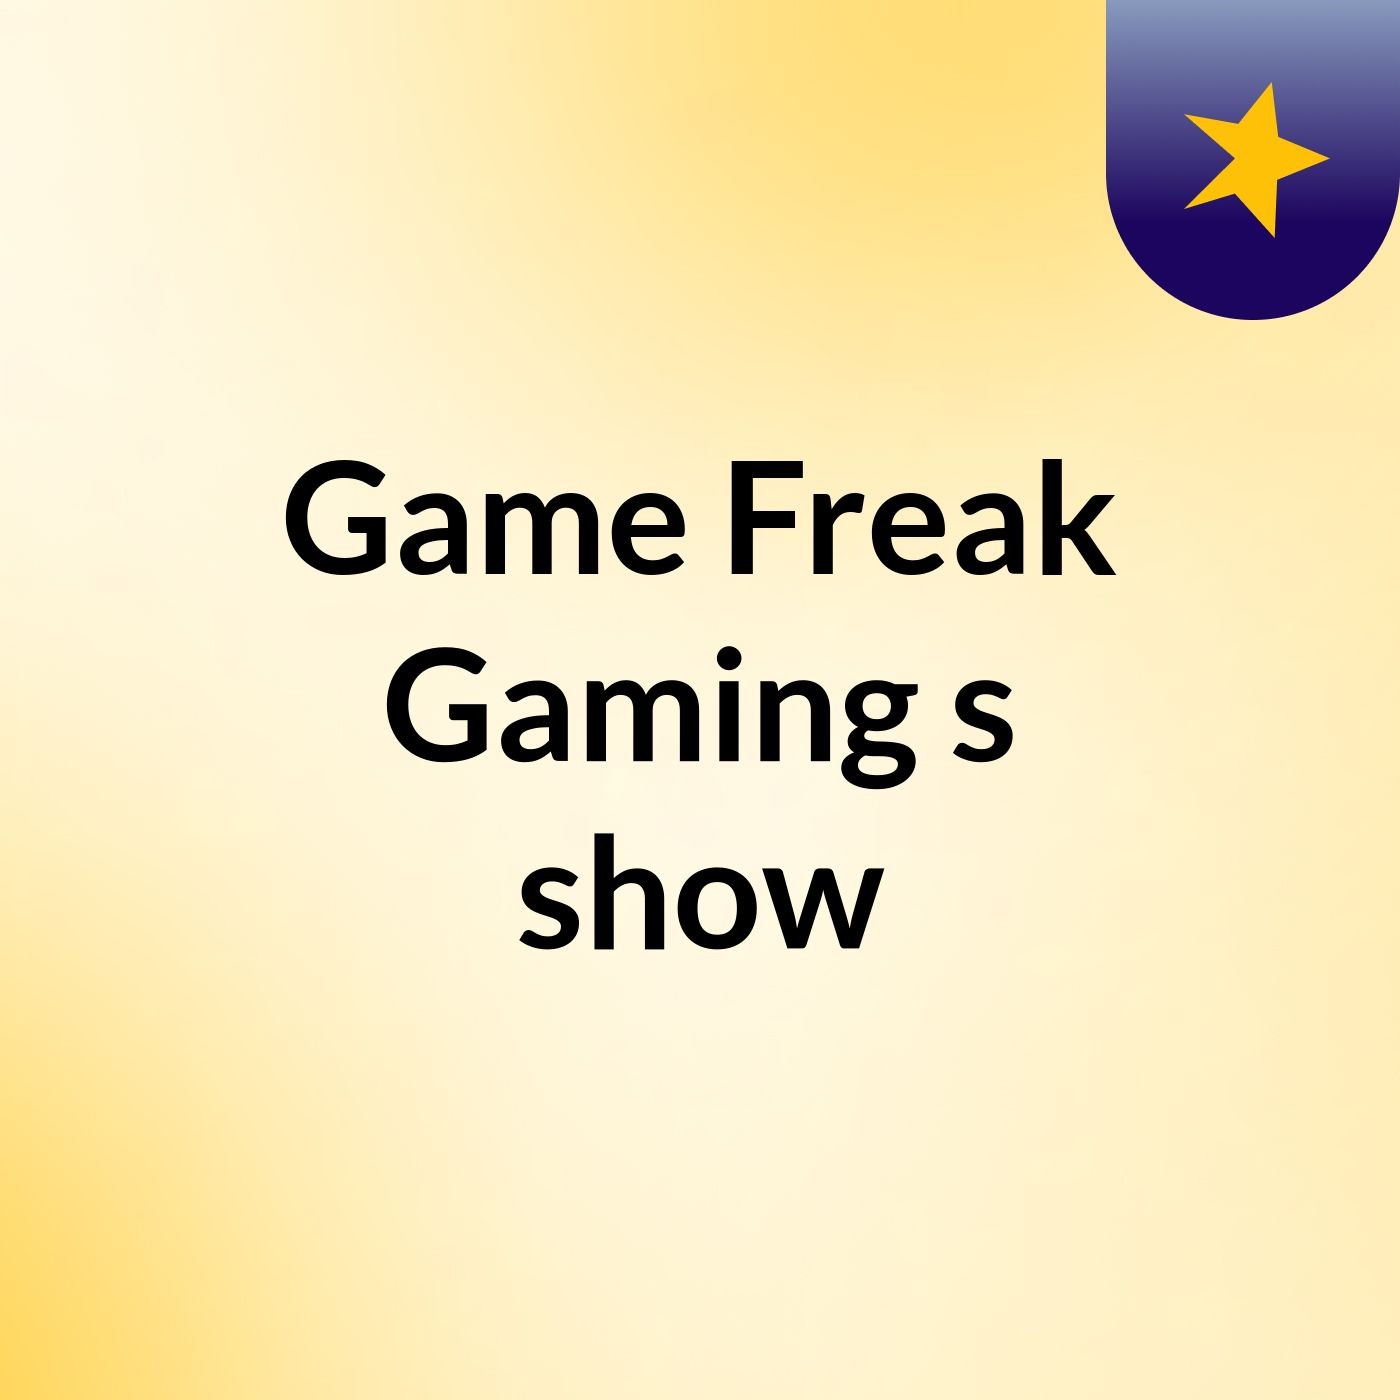 Game Freak Gaming's show